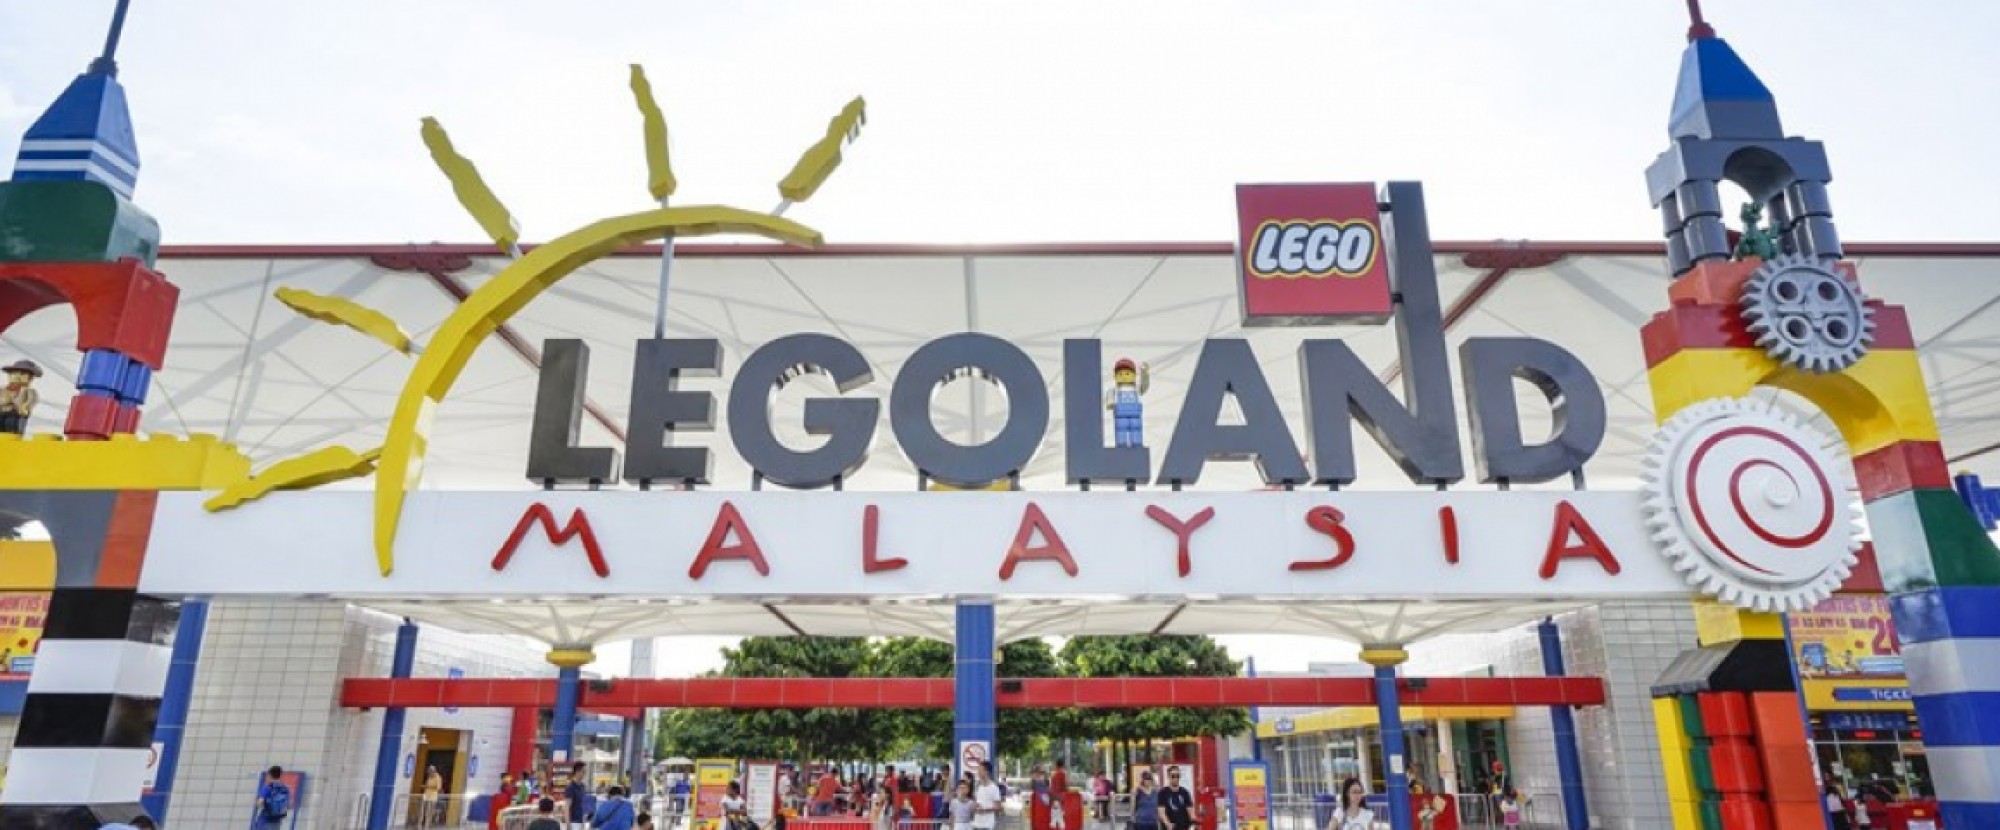 Legoland Malaysia - 2D1N Stay in Johor Bahru Hotel photo 31